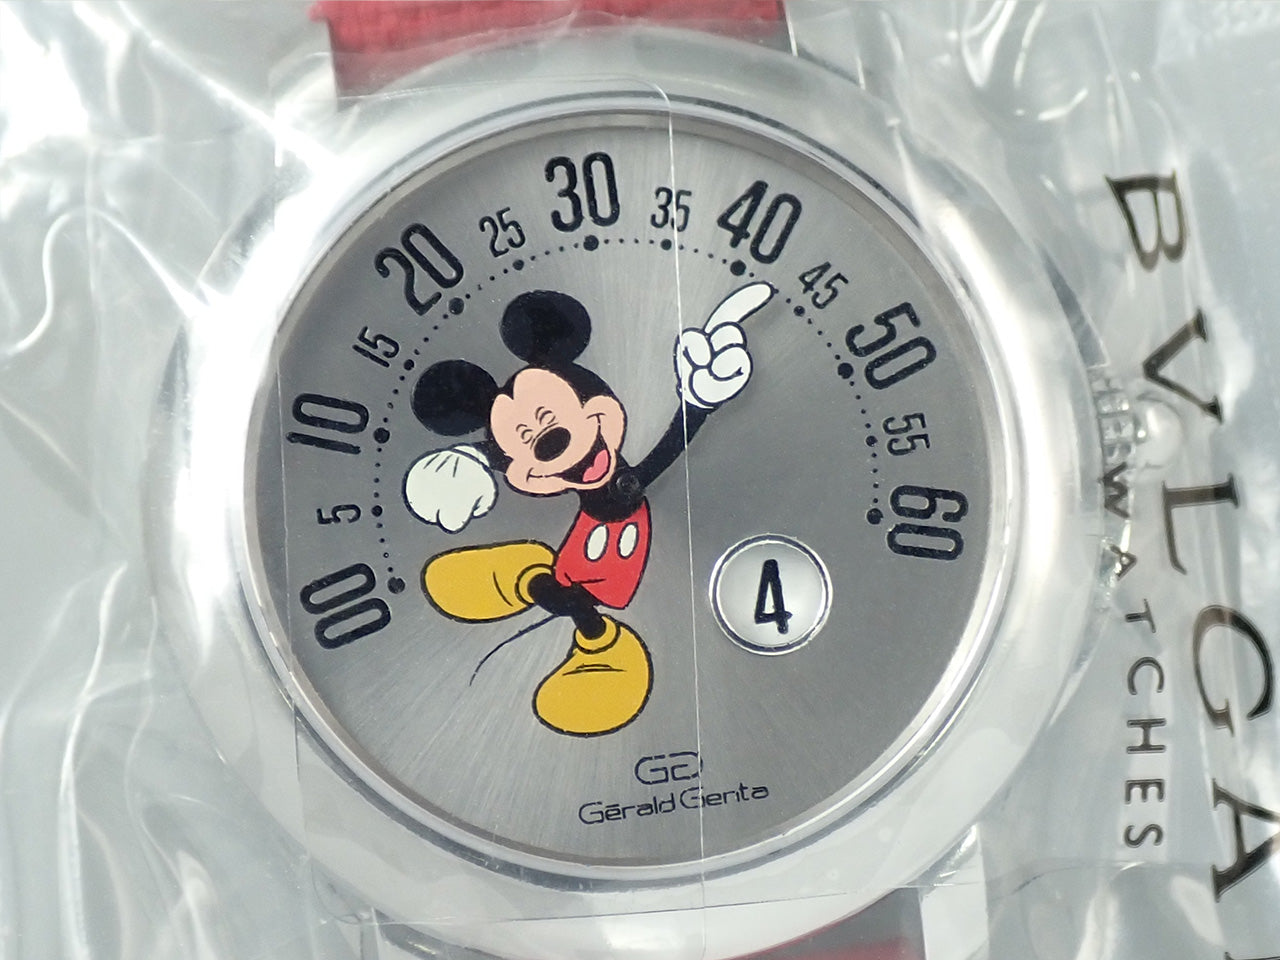 Gerald Genta Arena Retrograde Smile Mickey Mouse Disney &lt;Warranty, Box, etc.&gt;